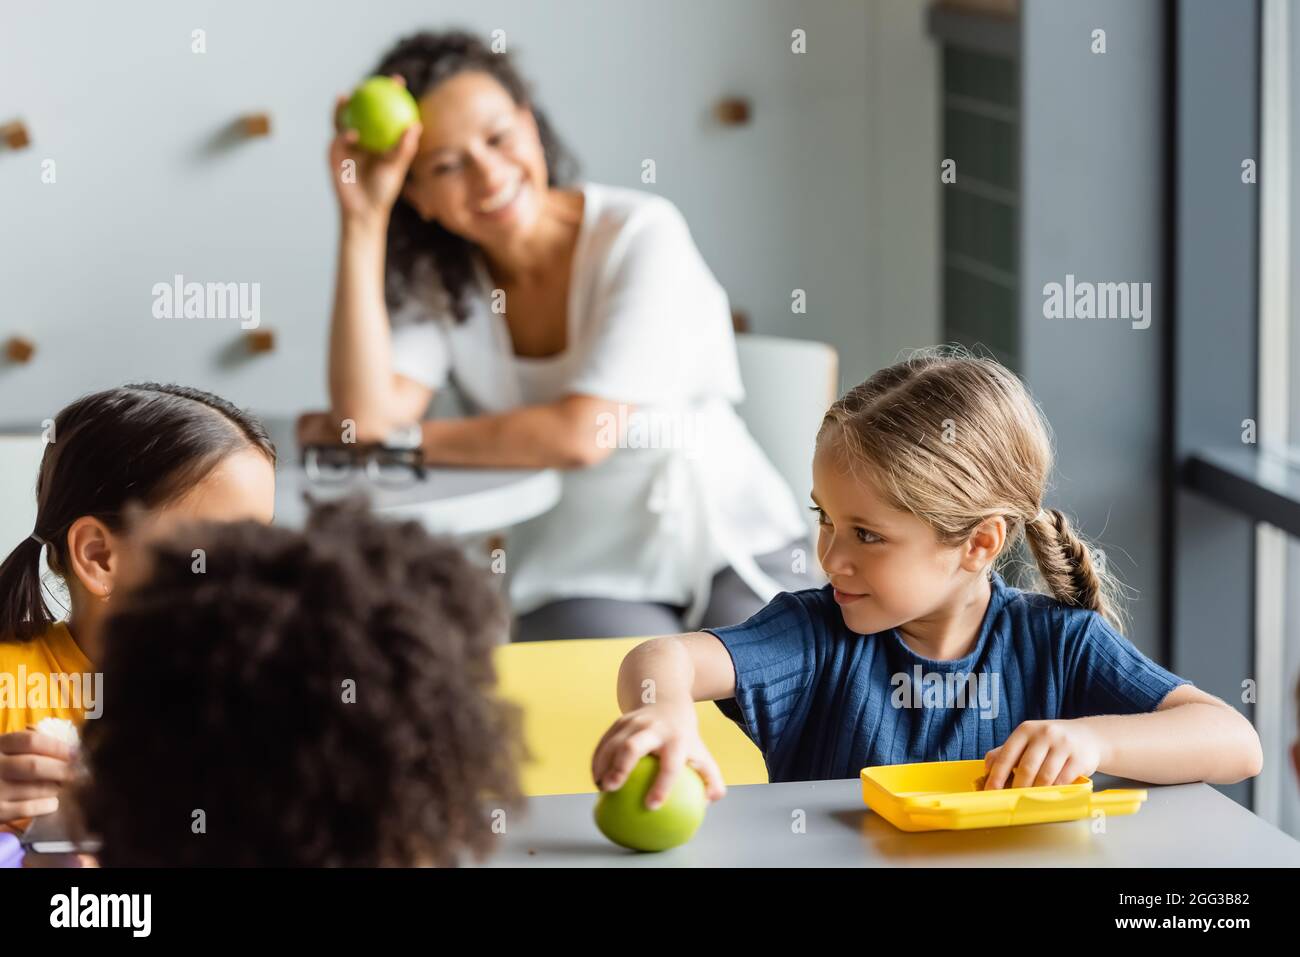 https://c8.alamy.com/comp/2GG3B82/multiethnic-kids-having-lunch-in-school-canteen-near-teacher-smiling-on-blurred-background-2GG3B82.jpg